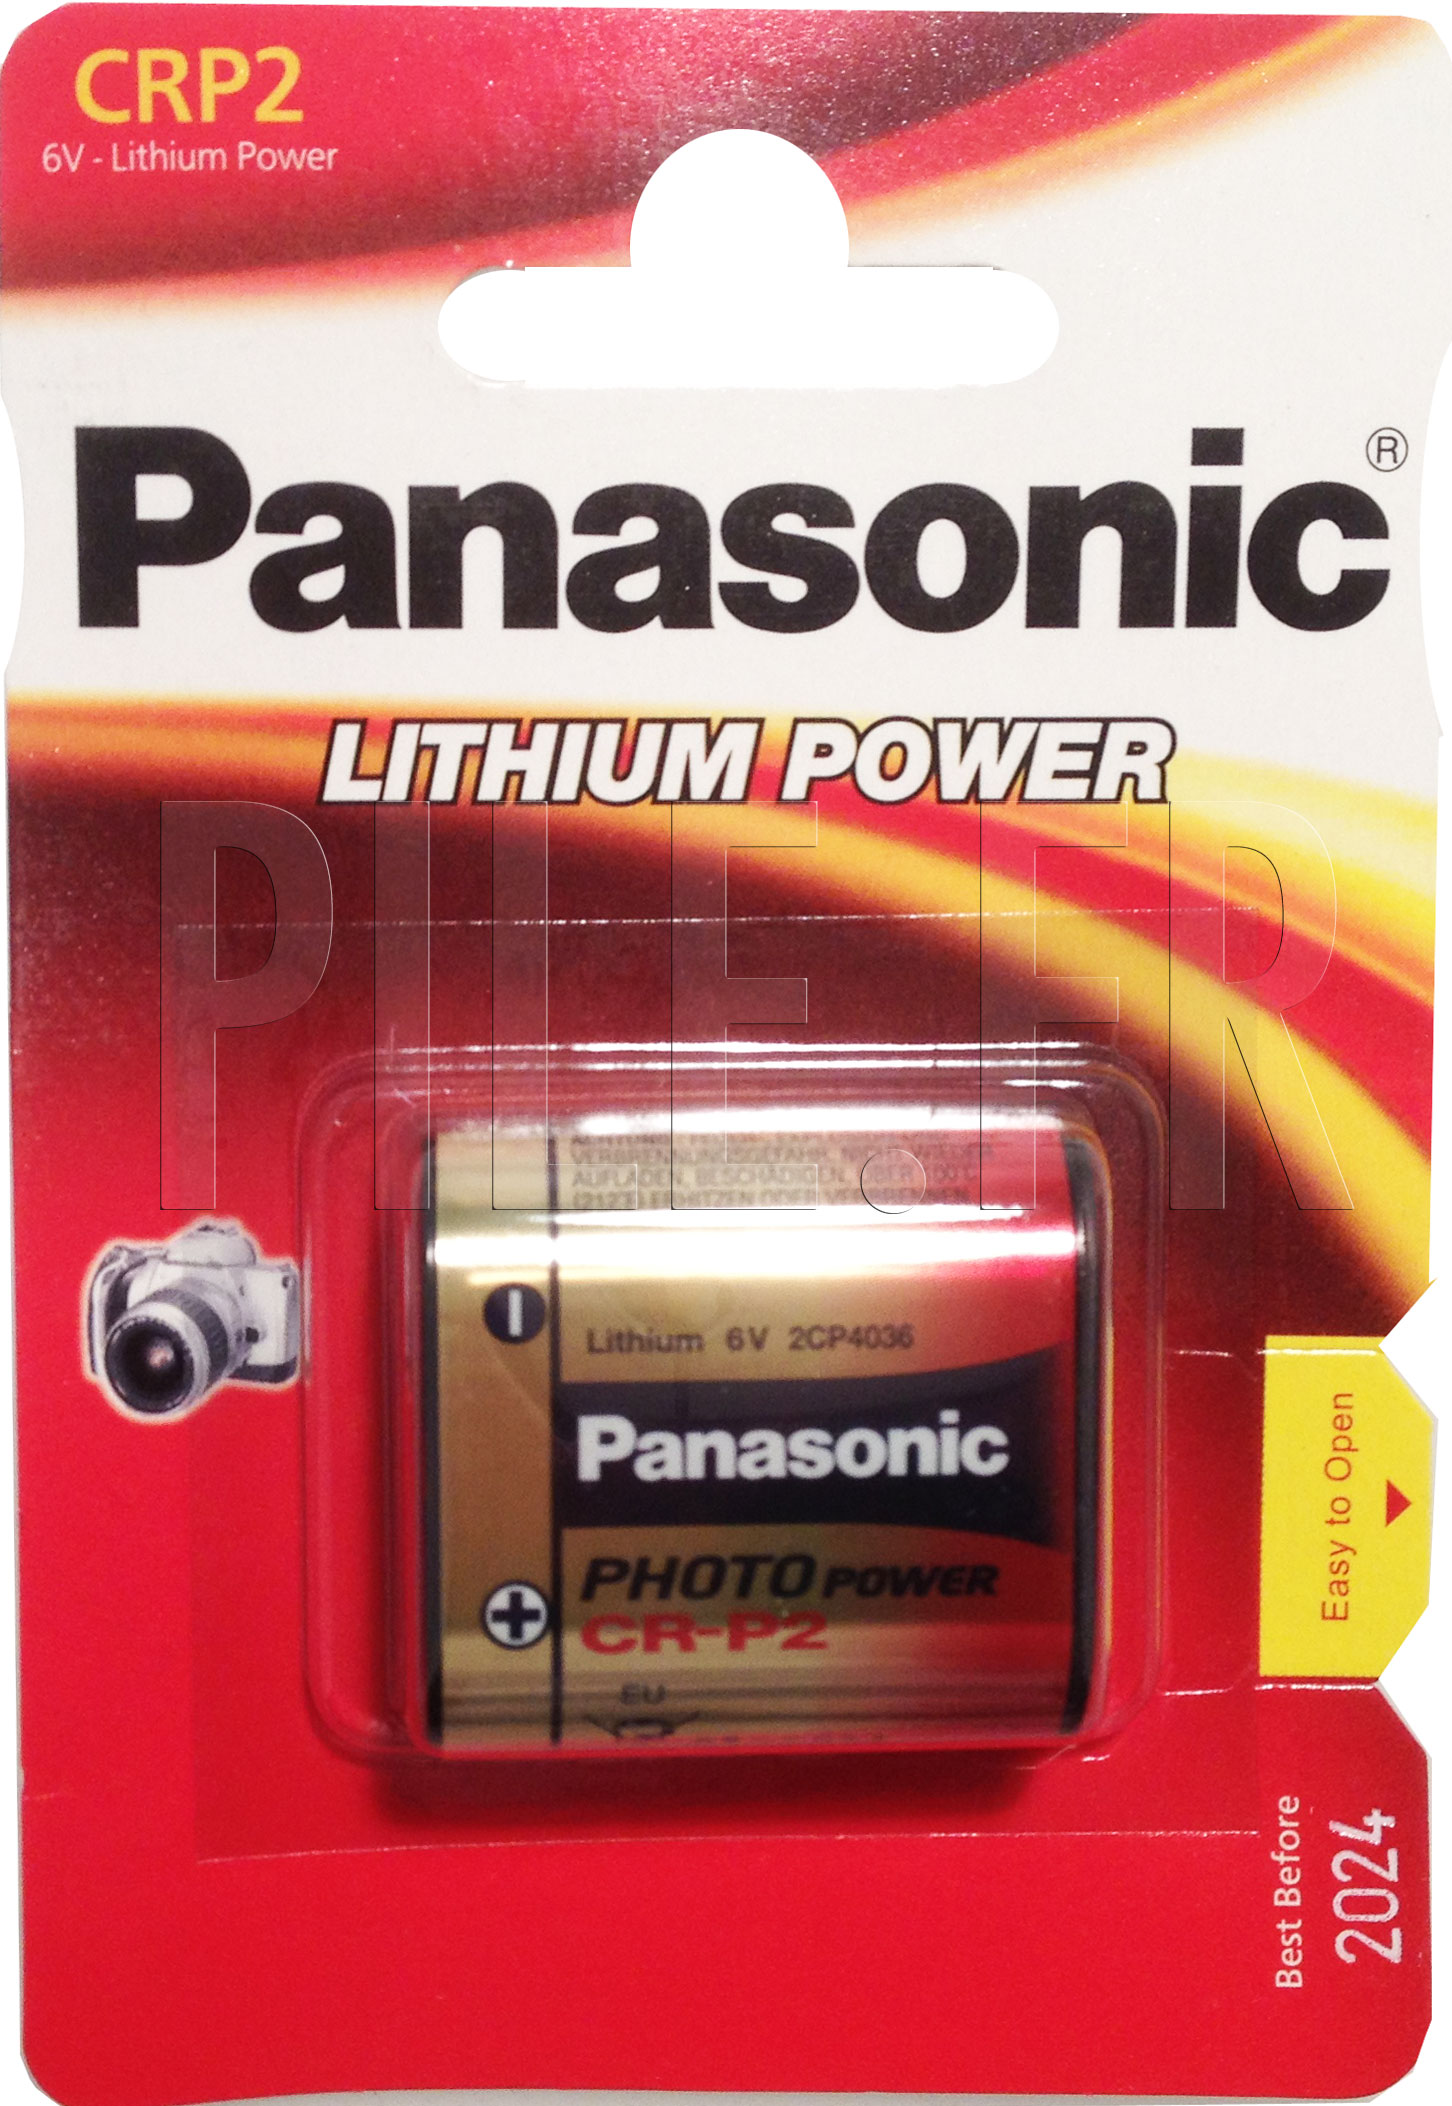 https://www.pile.fr/443/crp2l-panasonic-lithium-6-volts.jpg